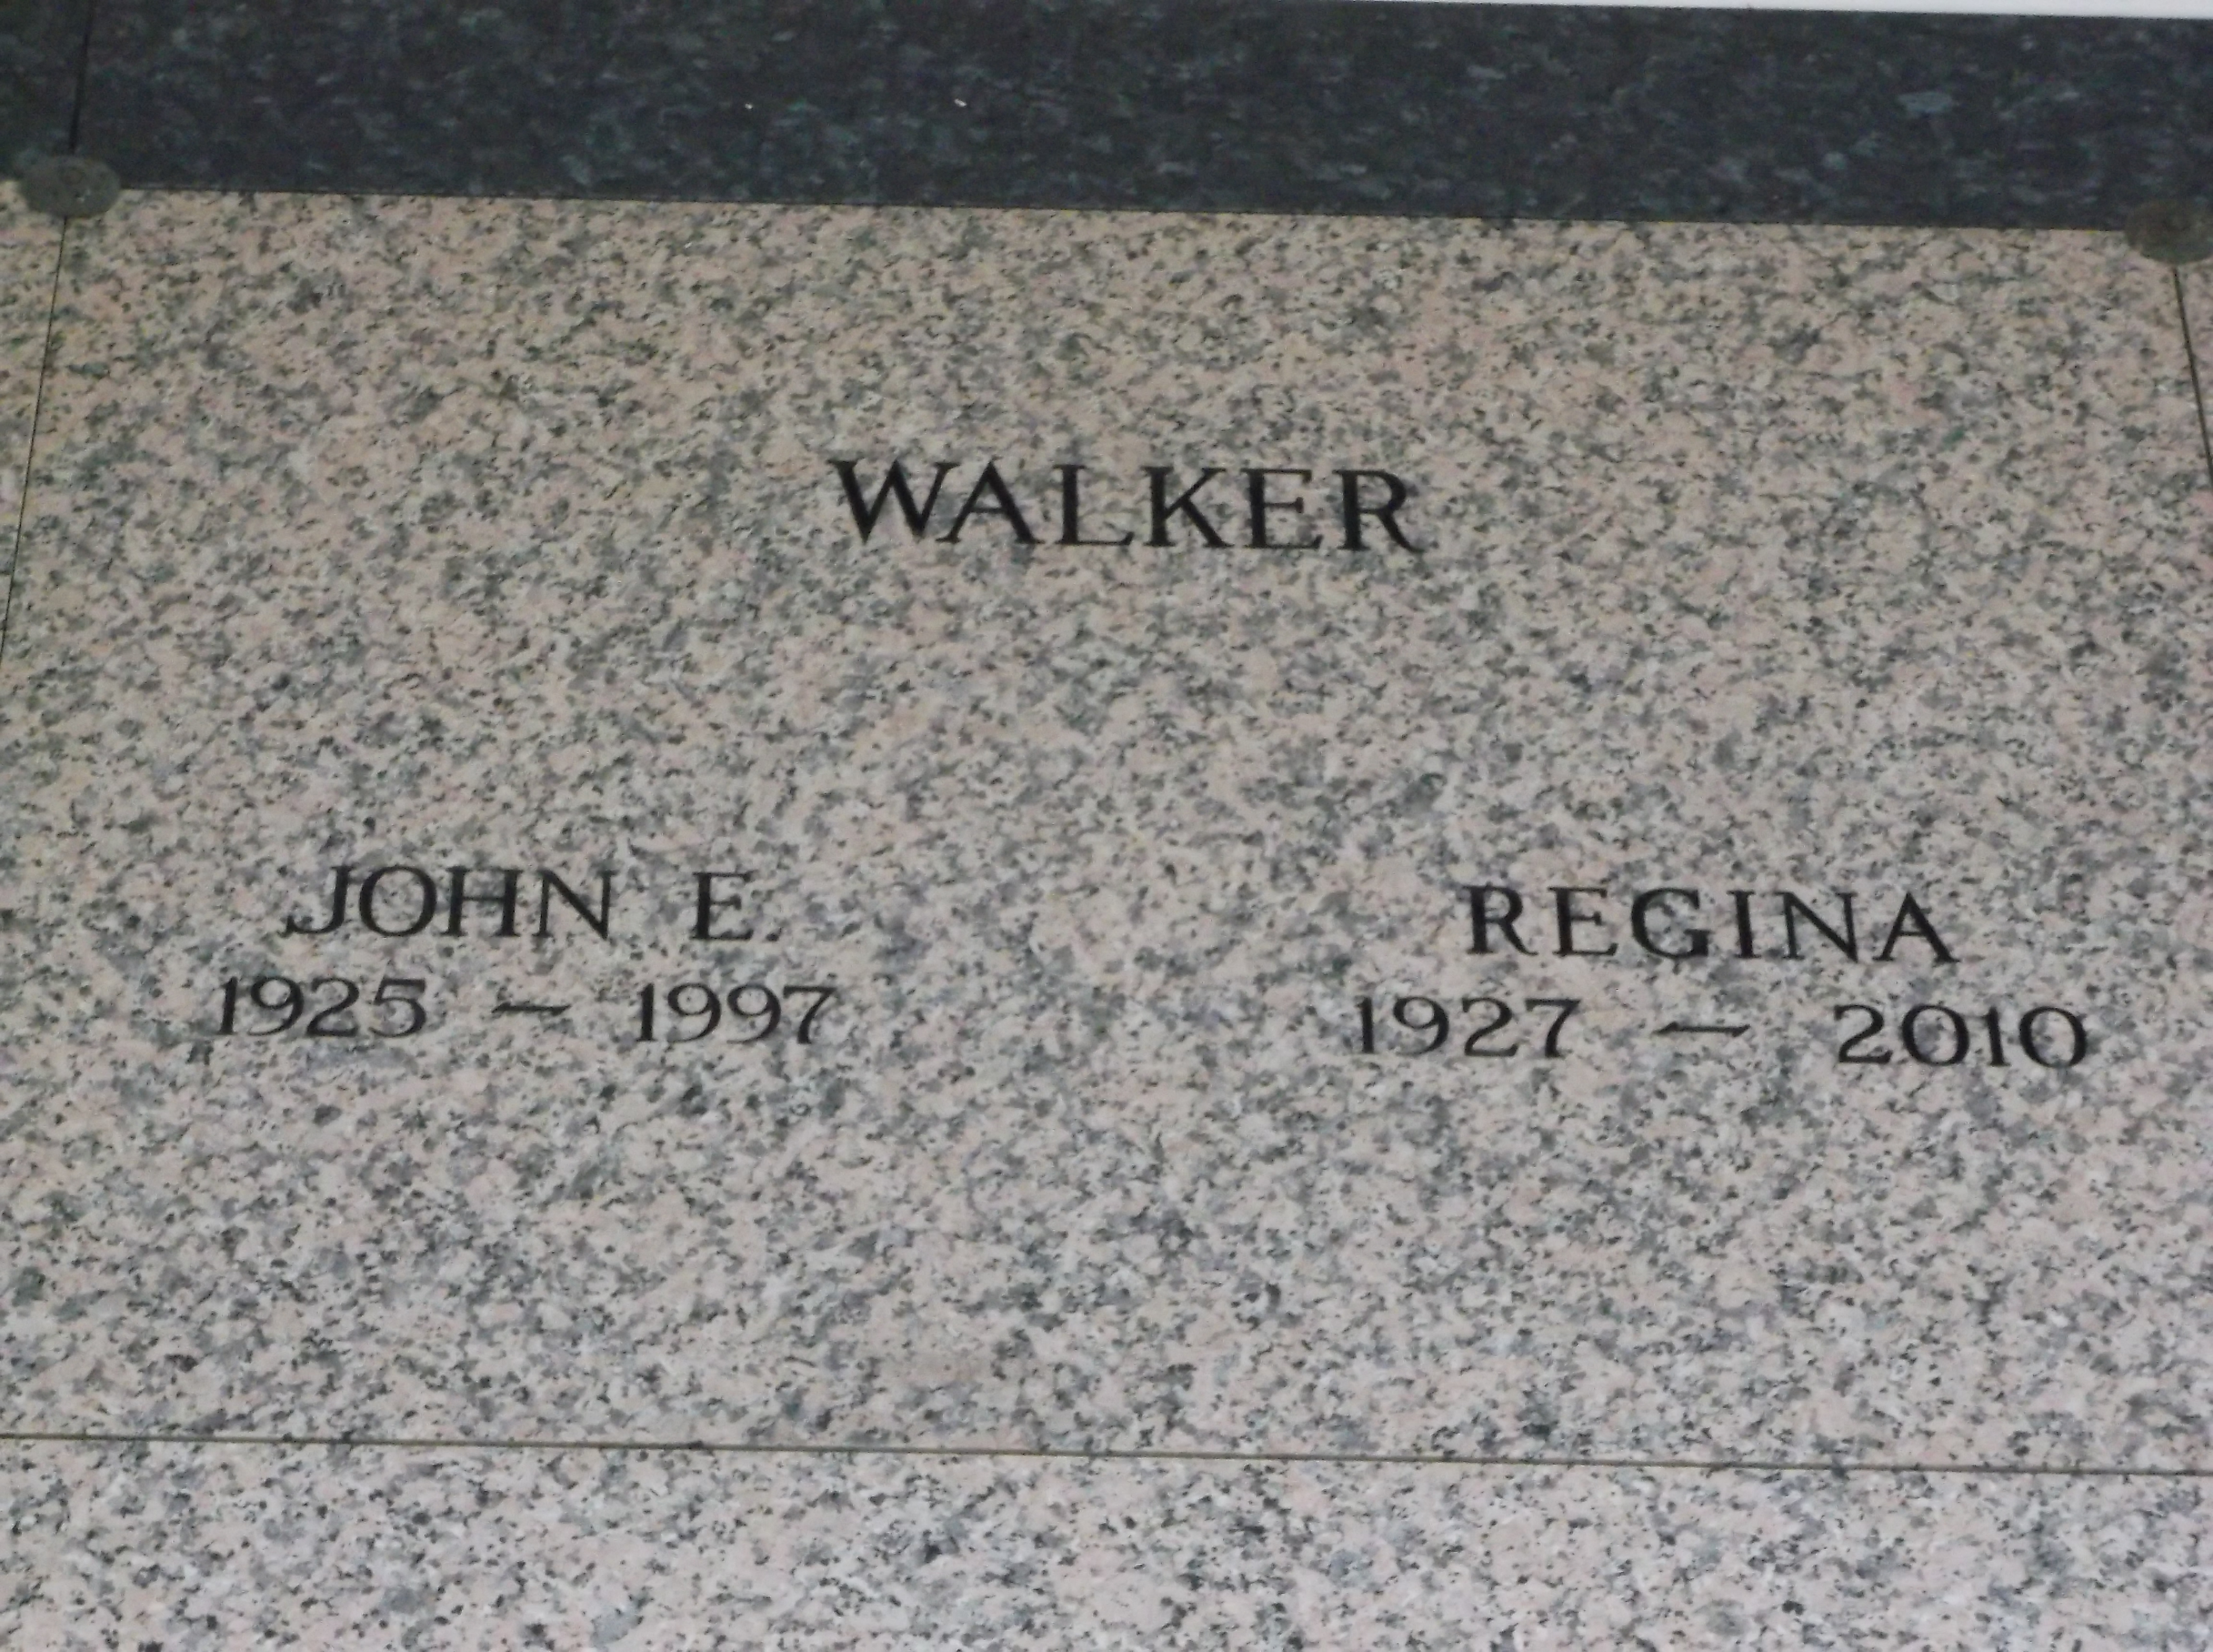 John E Walker